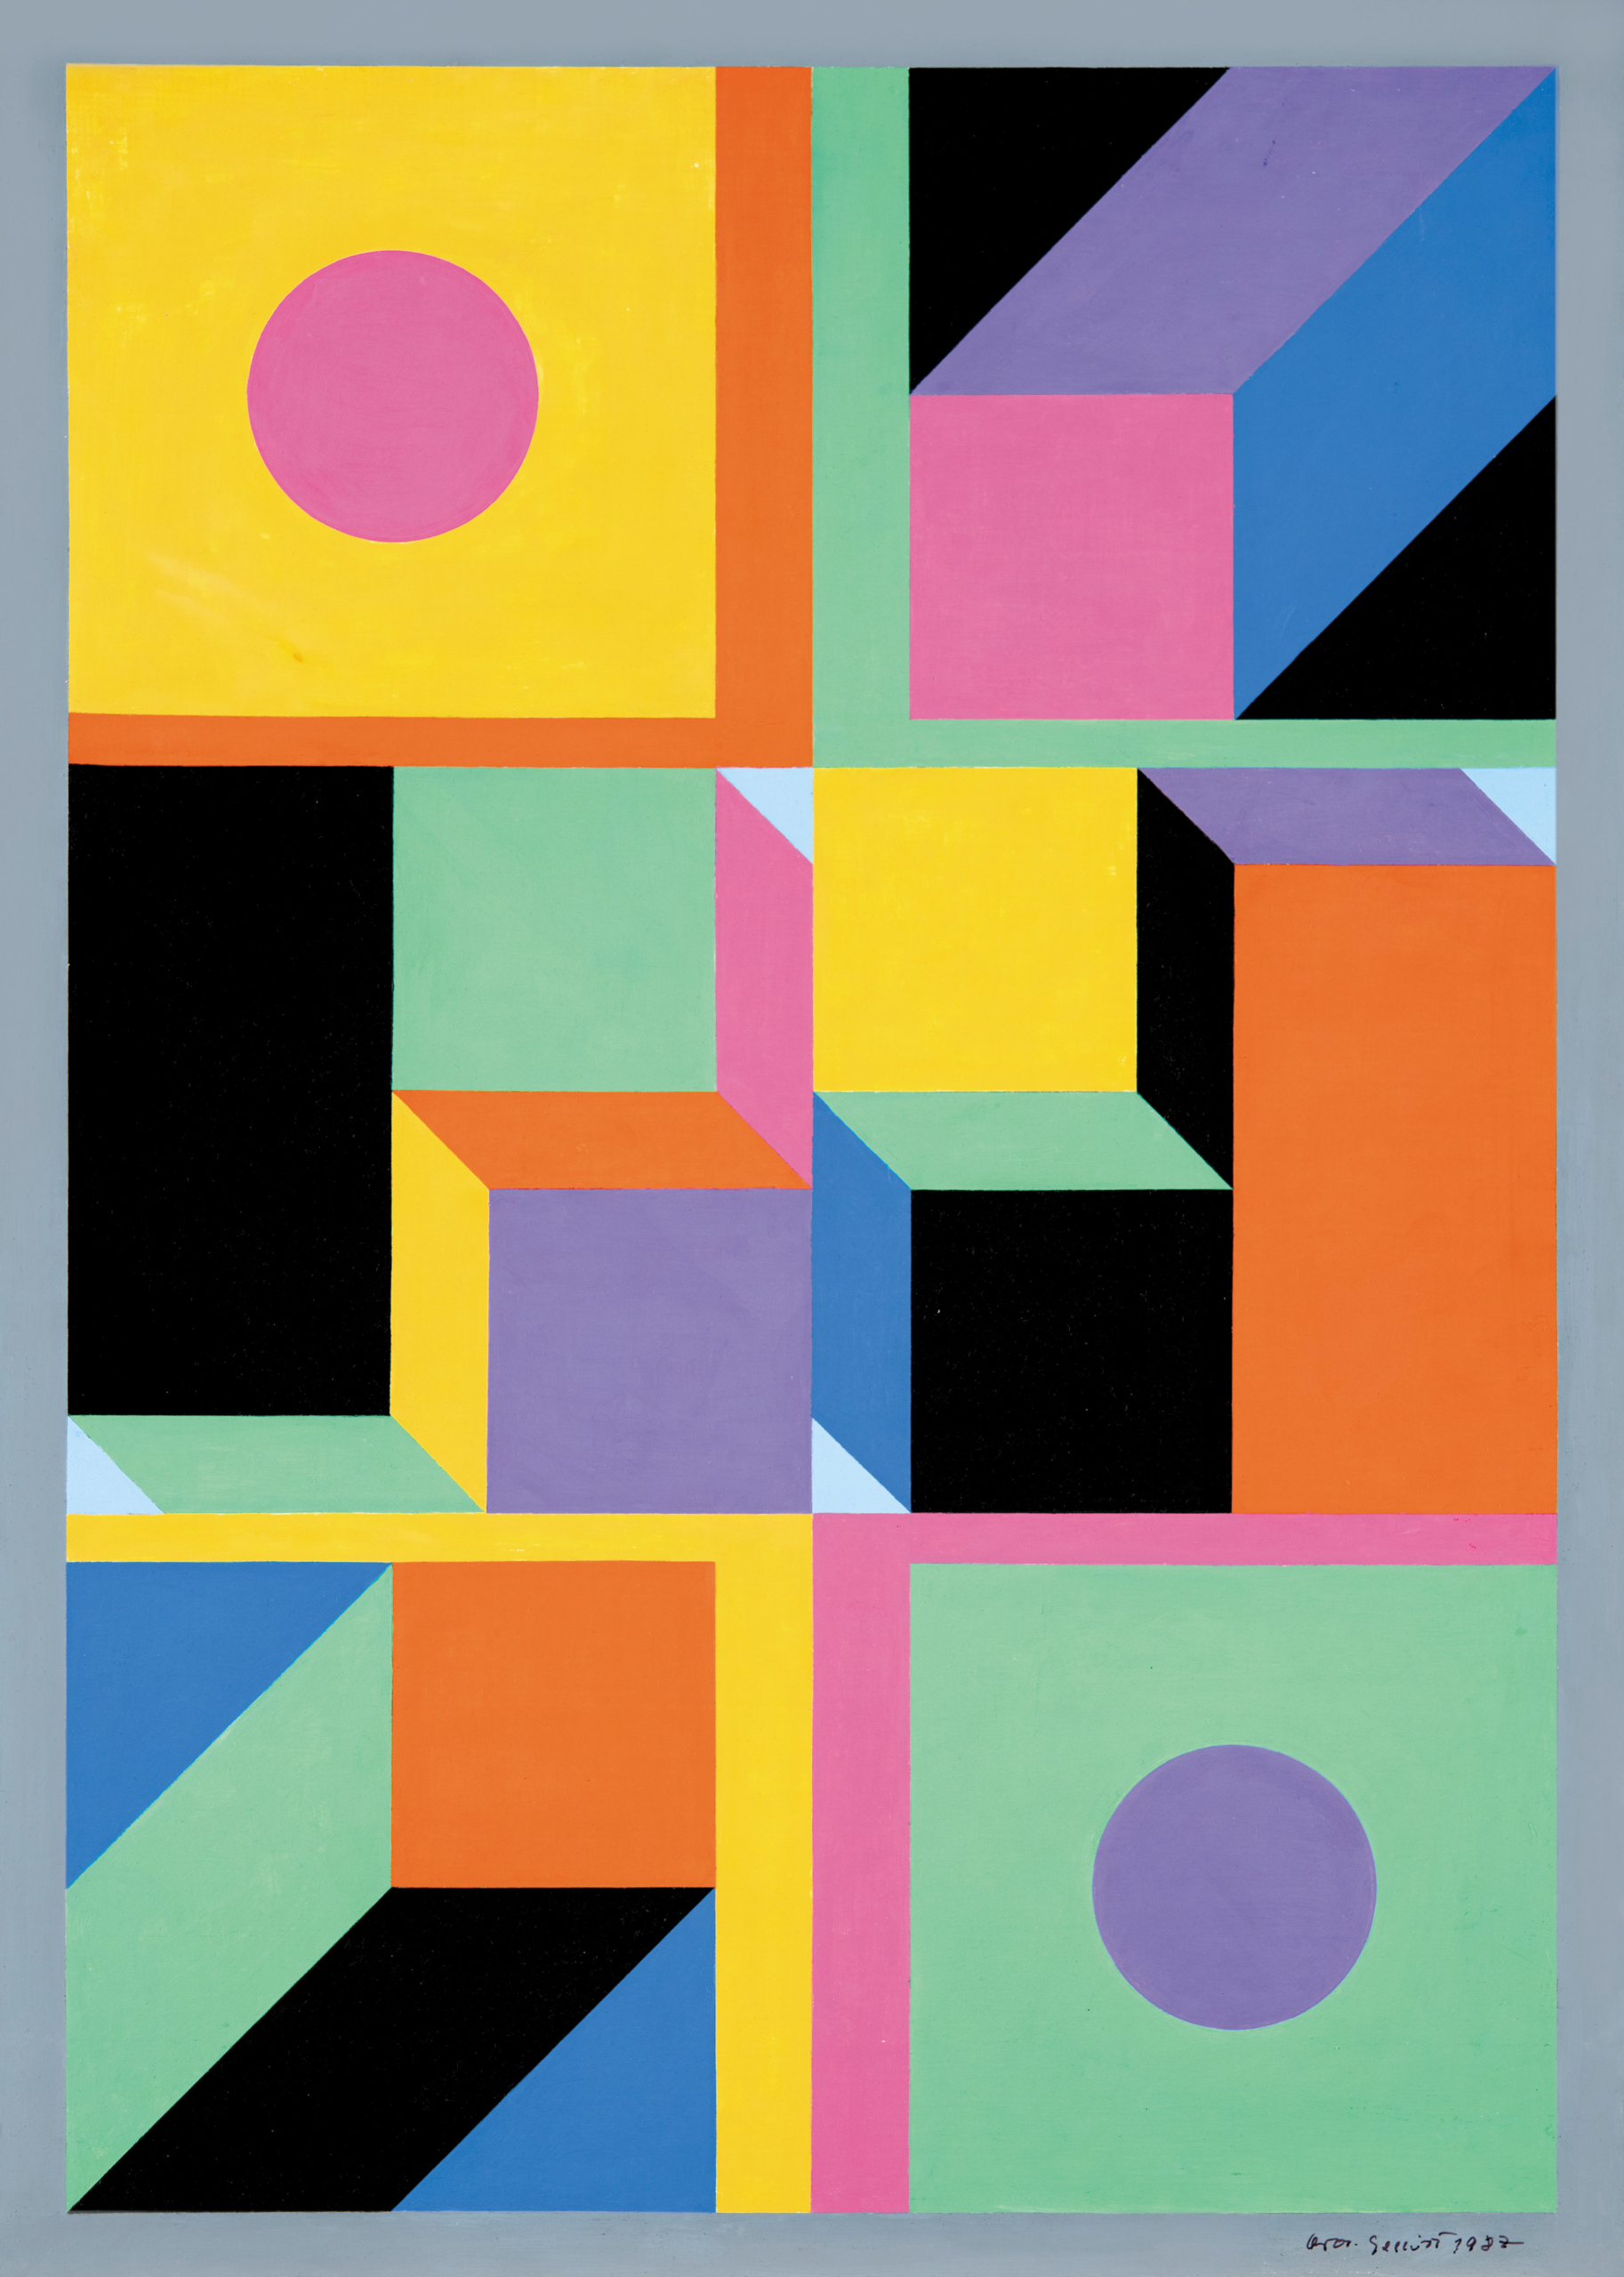 Orosz Gellért (1919-2002) Alternate Dimensions, 1987